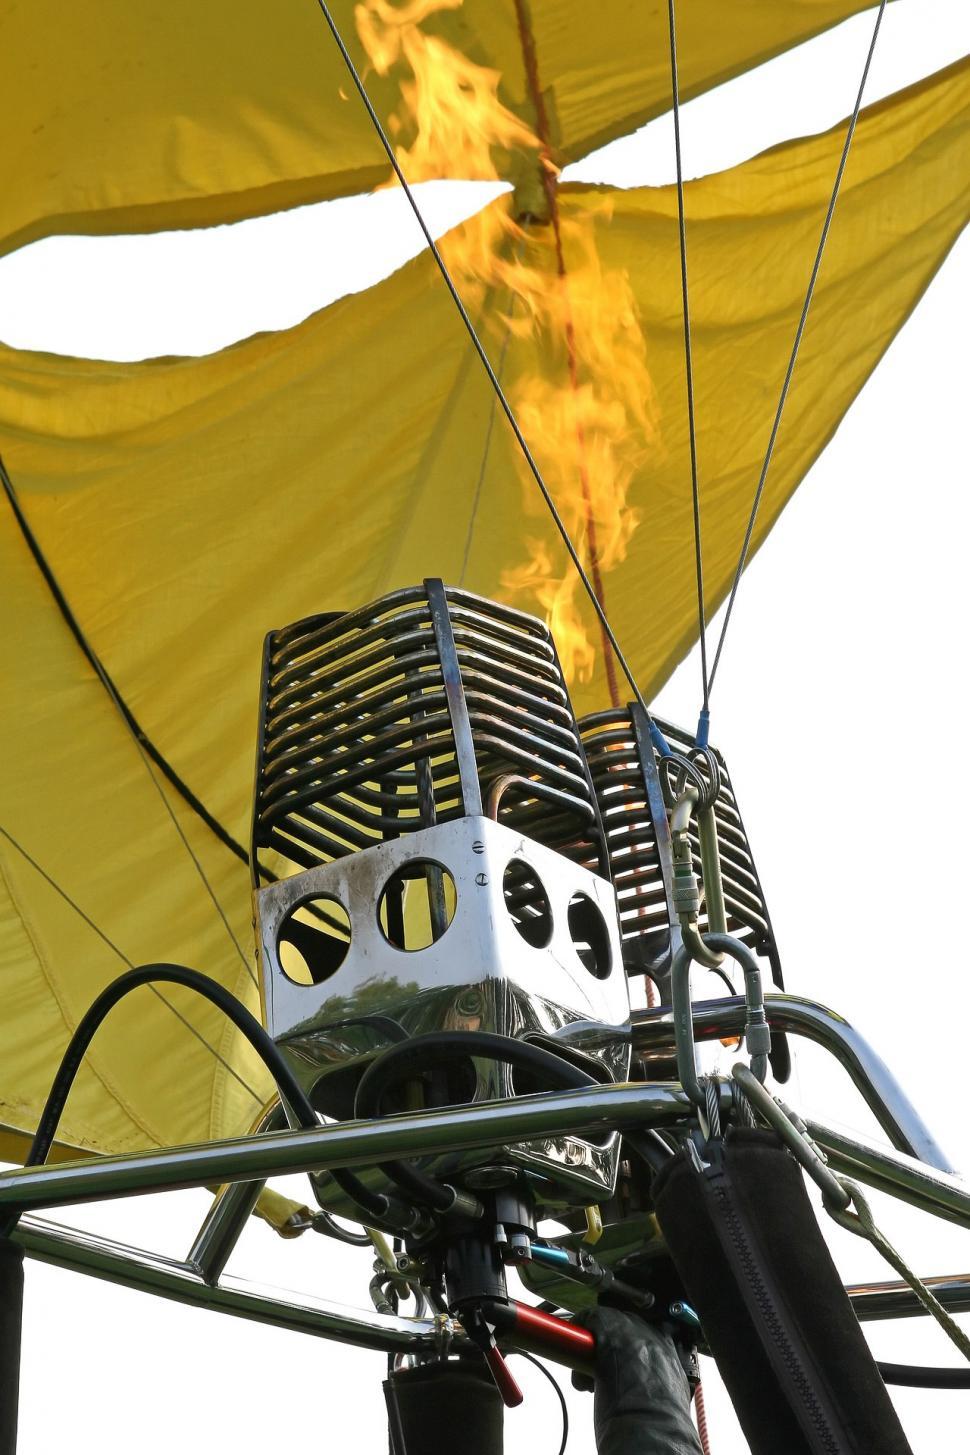 Free Image of Close Up of a Yellow Hot Air Balloon 